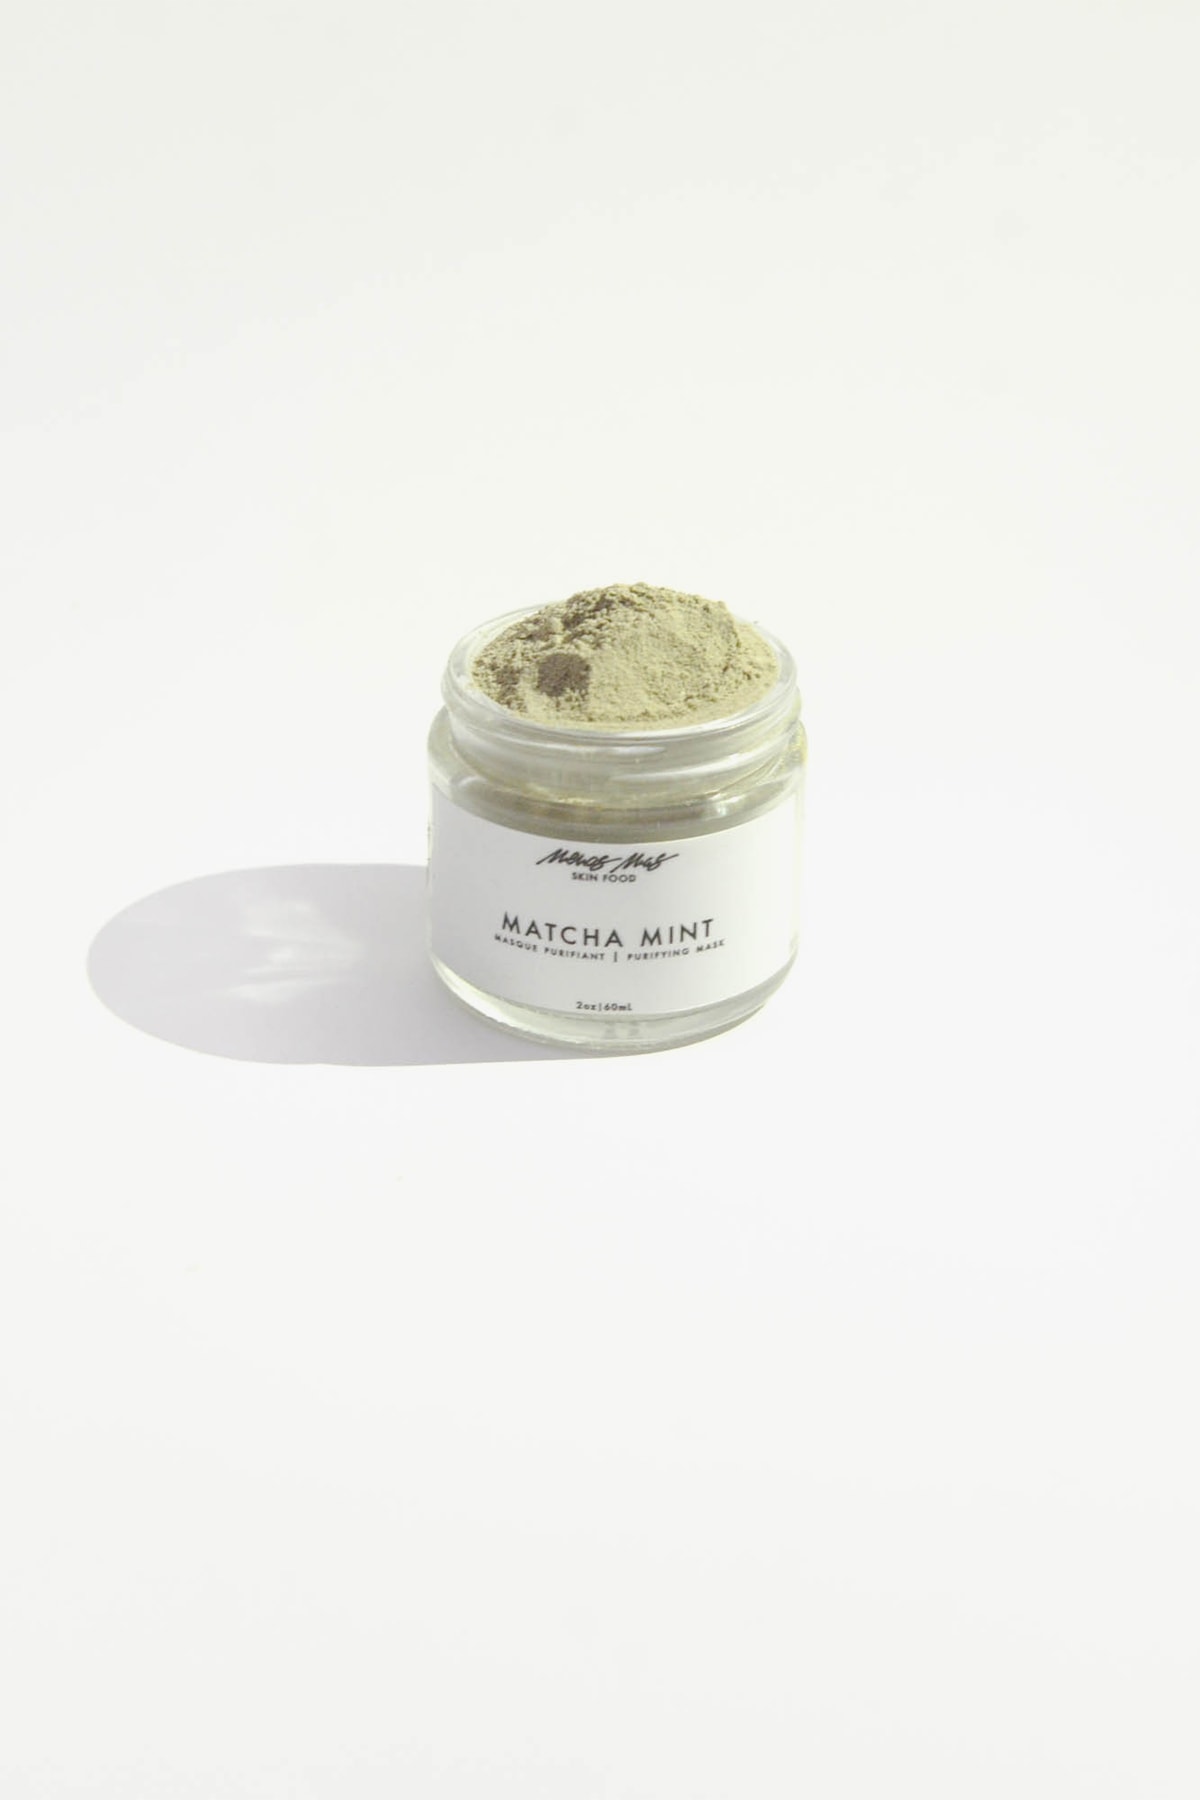 menos mas clean beauty organic natural ingredients skincare body butter salt scrub bath soak purifying detoxifying mask